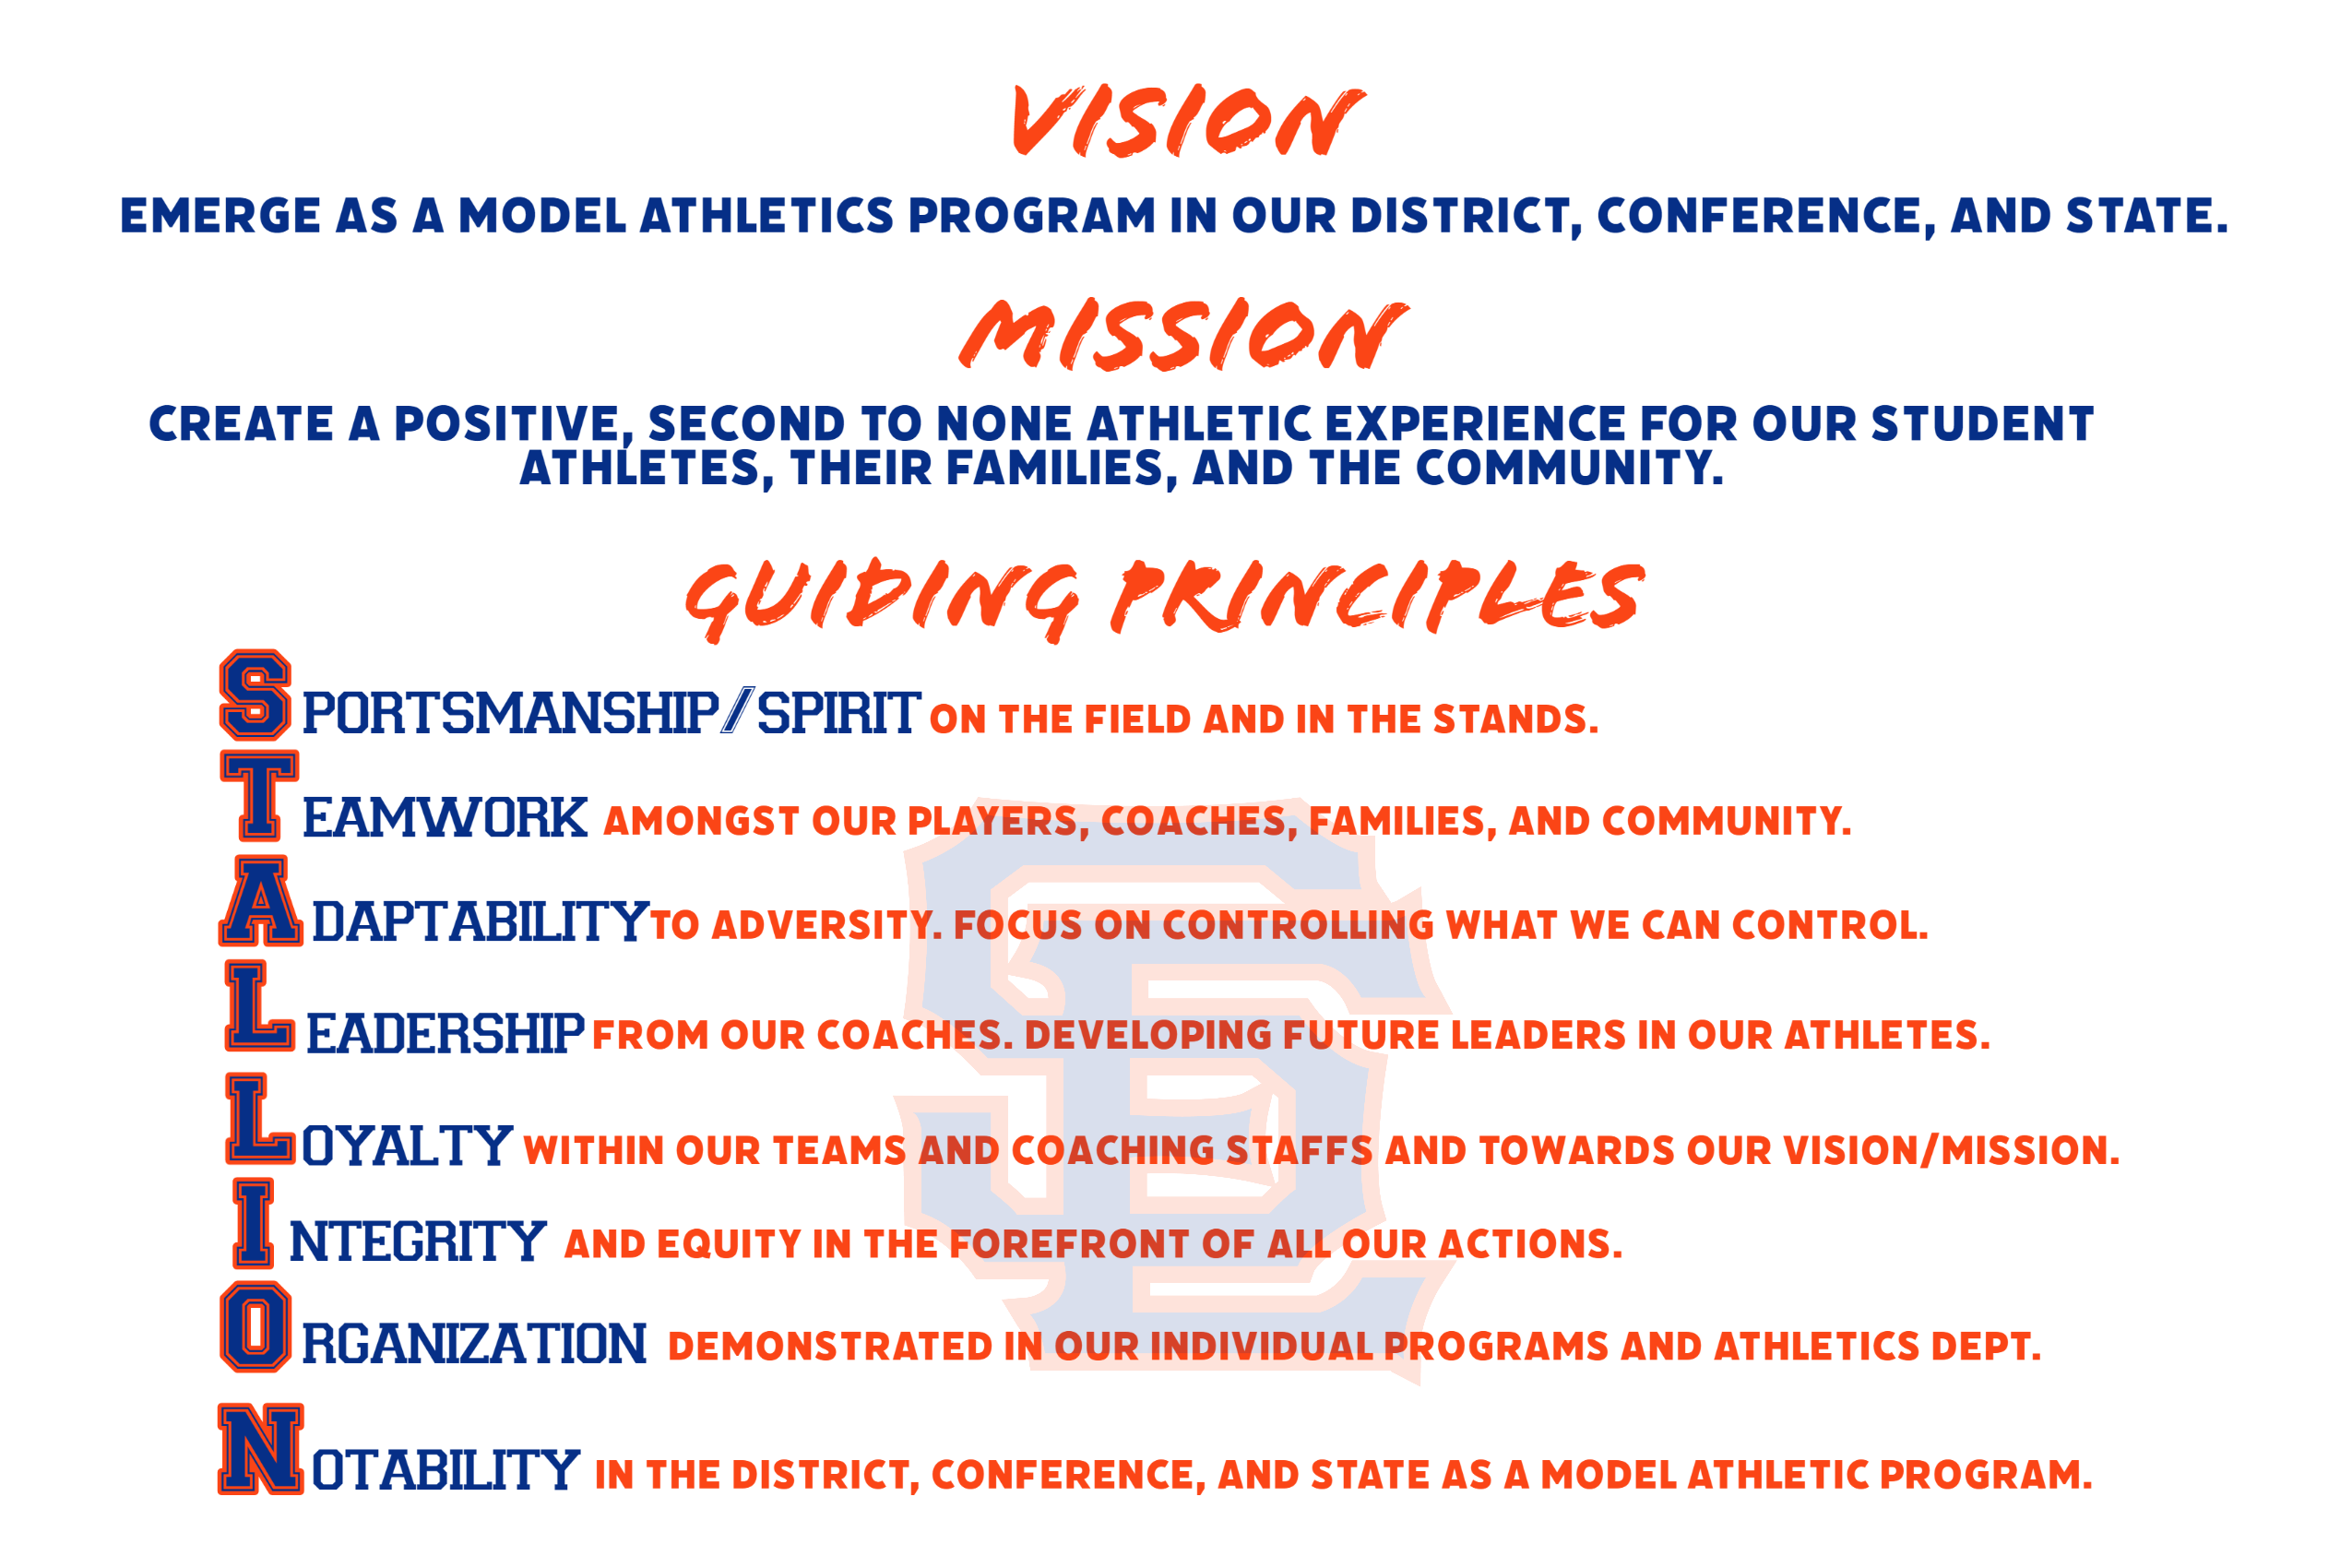 Vision/Mission